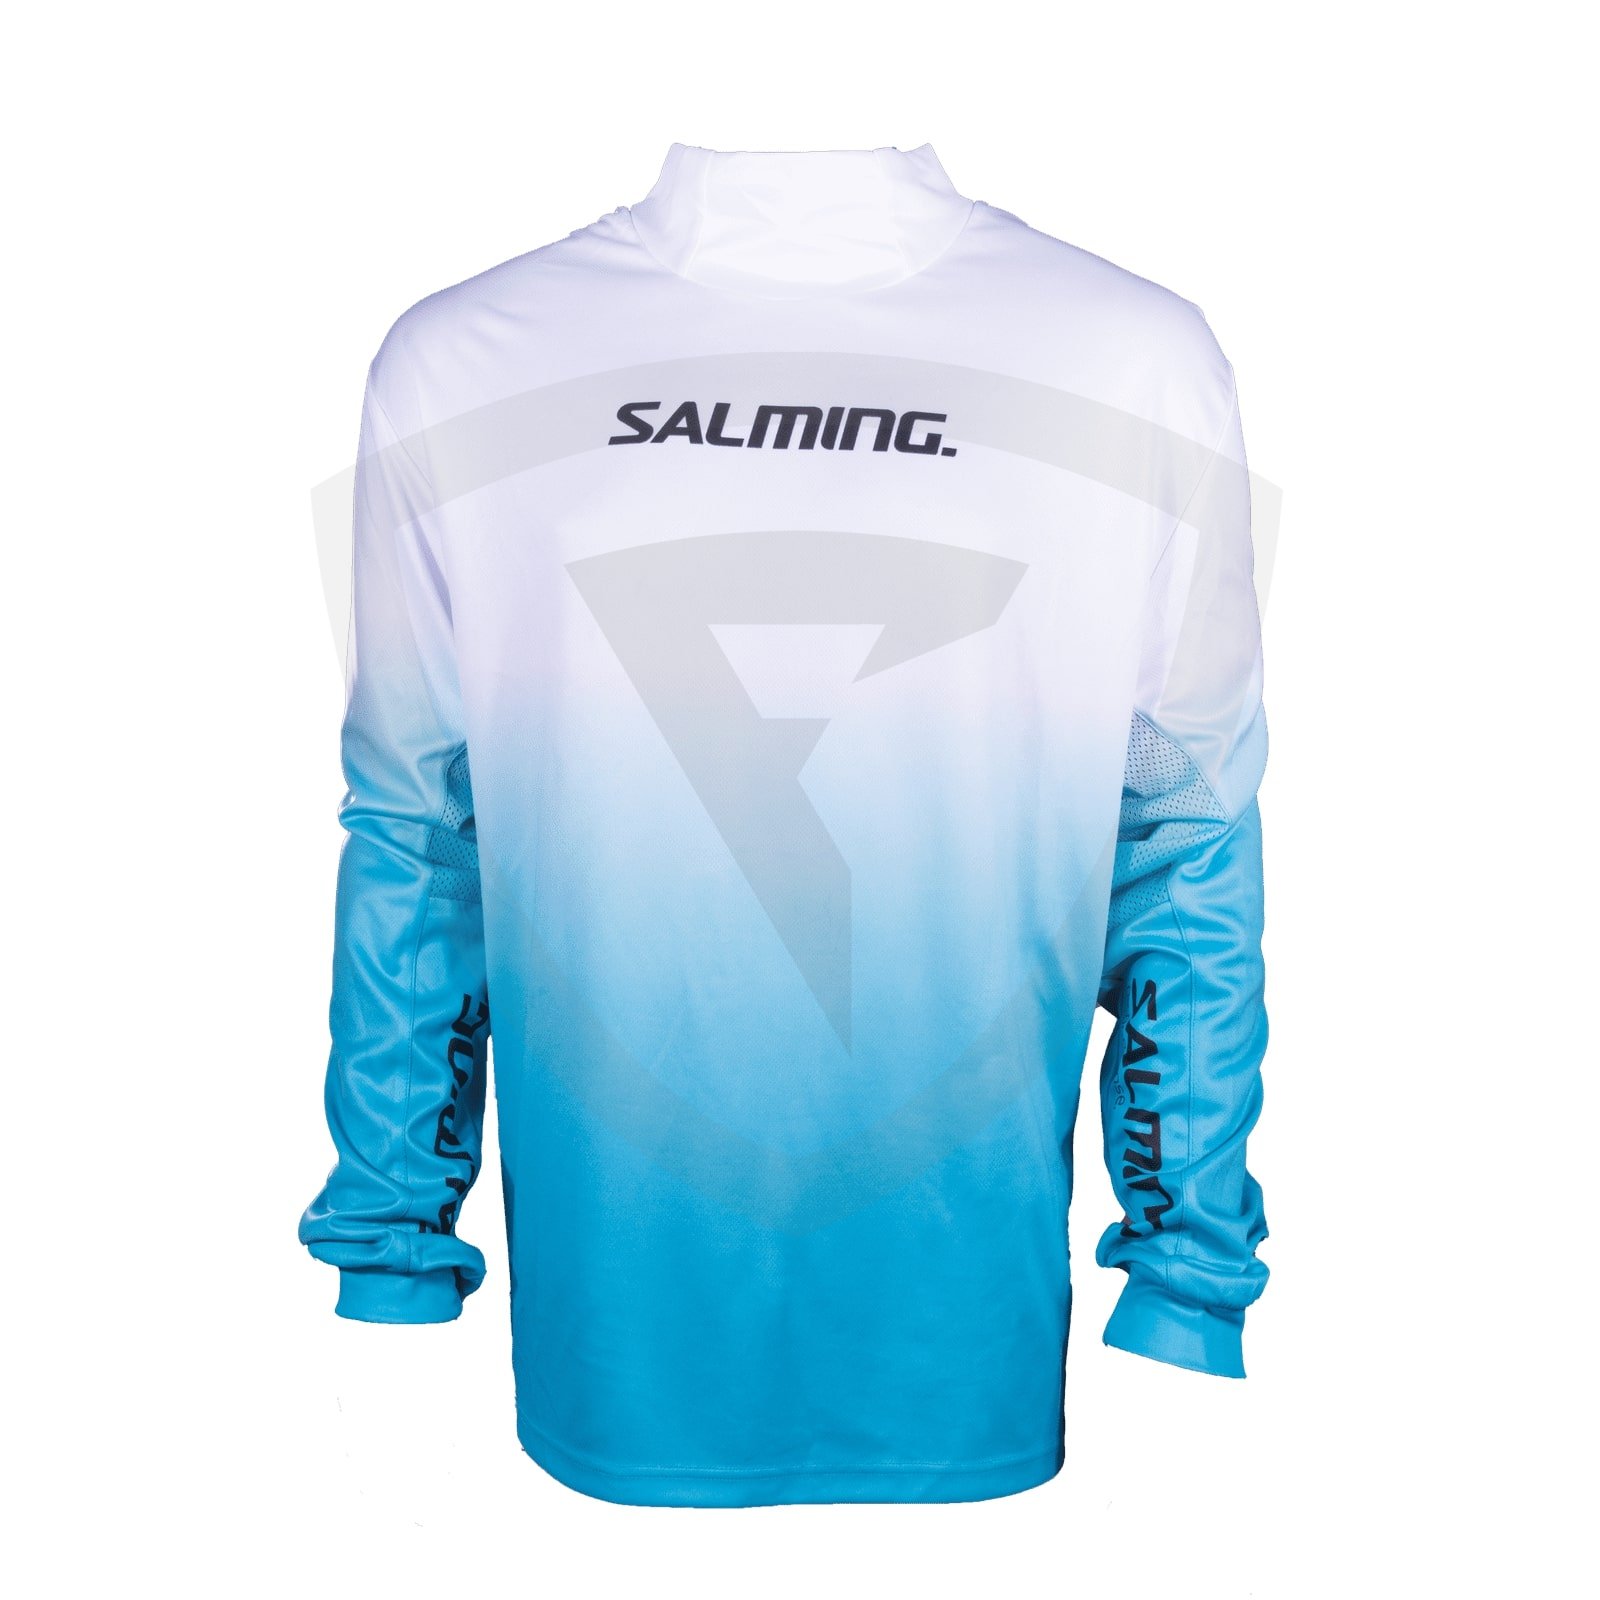 Salming Goalie Jersey SR Blue-White XXL modrá-bílá